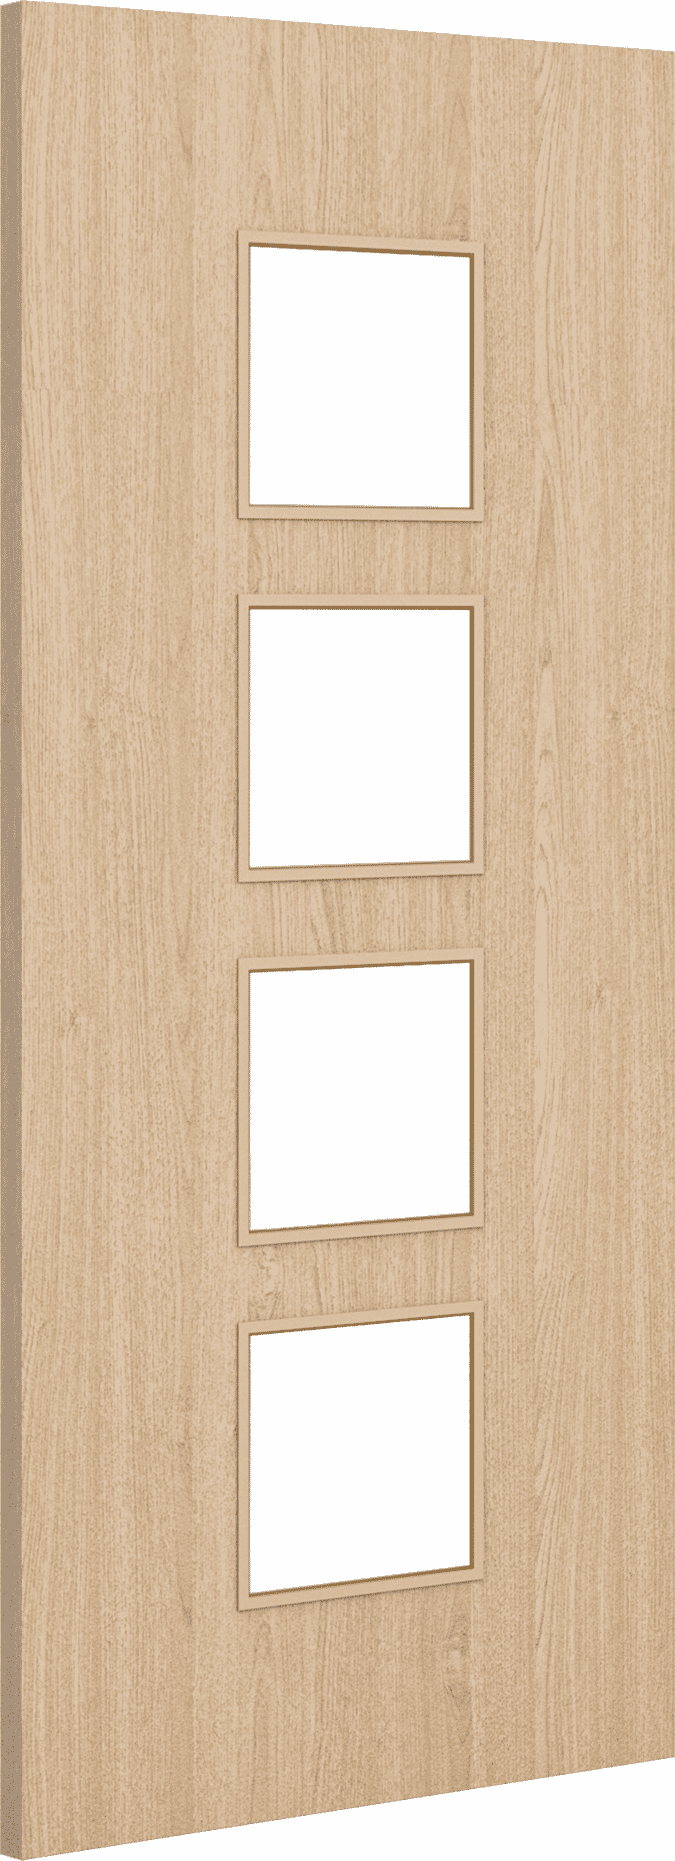 2040mm x 826mm x 44mm Architectural Oak 09 Frosted Glazed - Prefinished FD30 Fire Door Blank